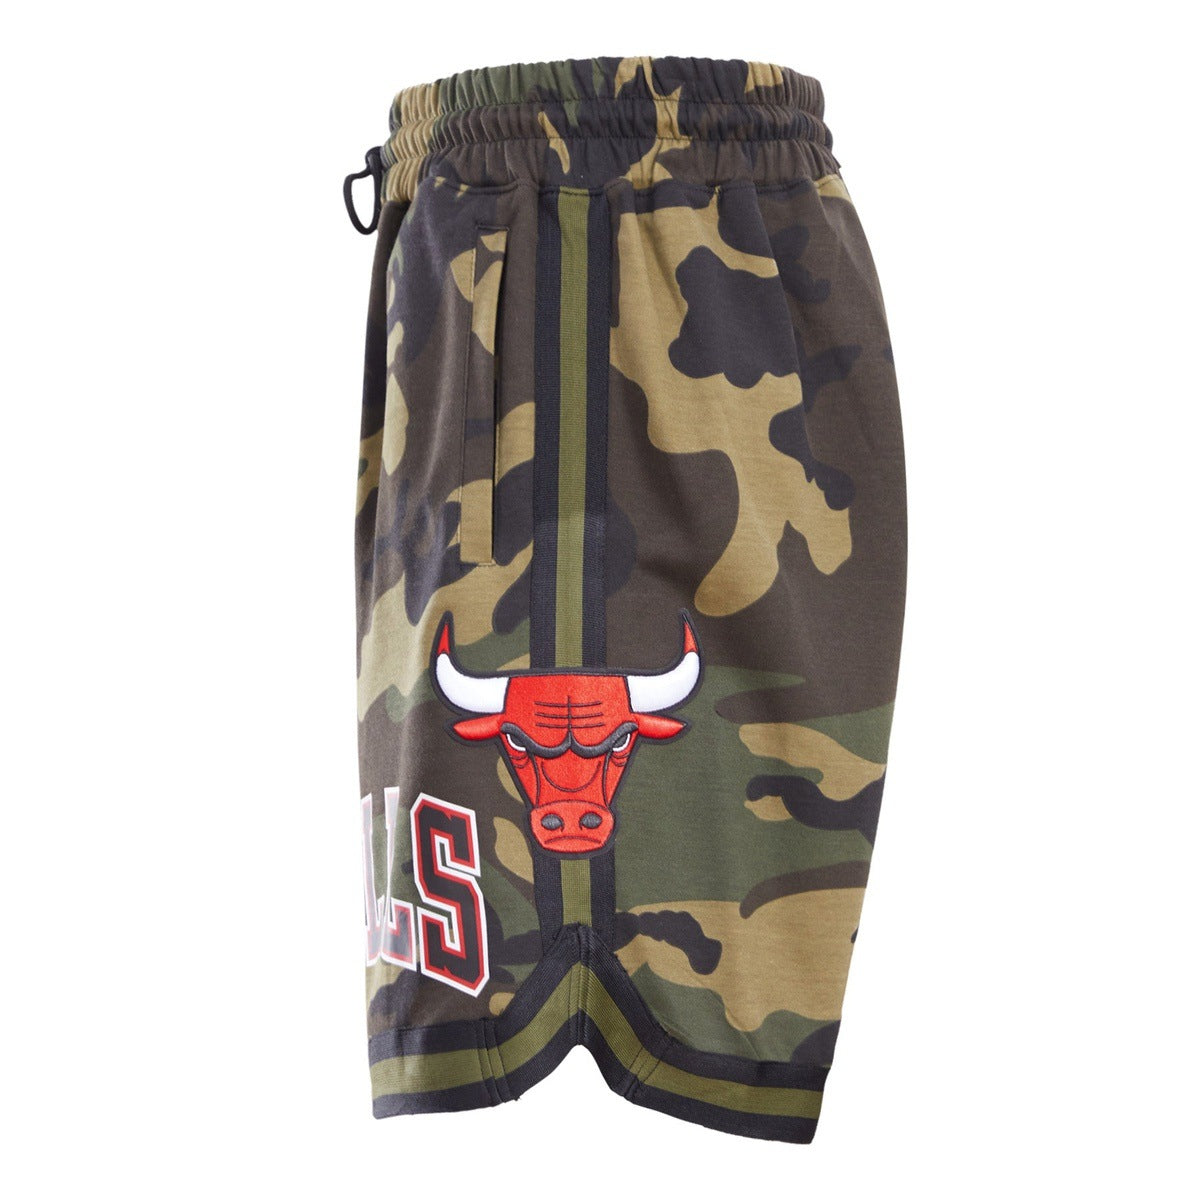 Lids Chicago Bulls Pro Standard Team Shorts - Camo